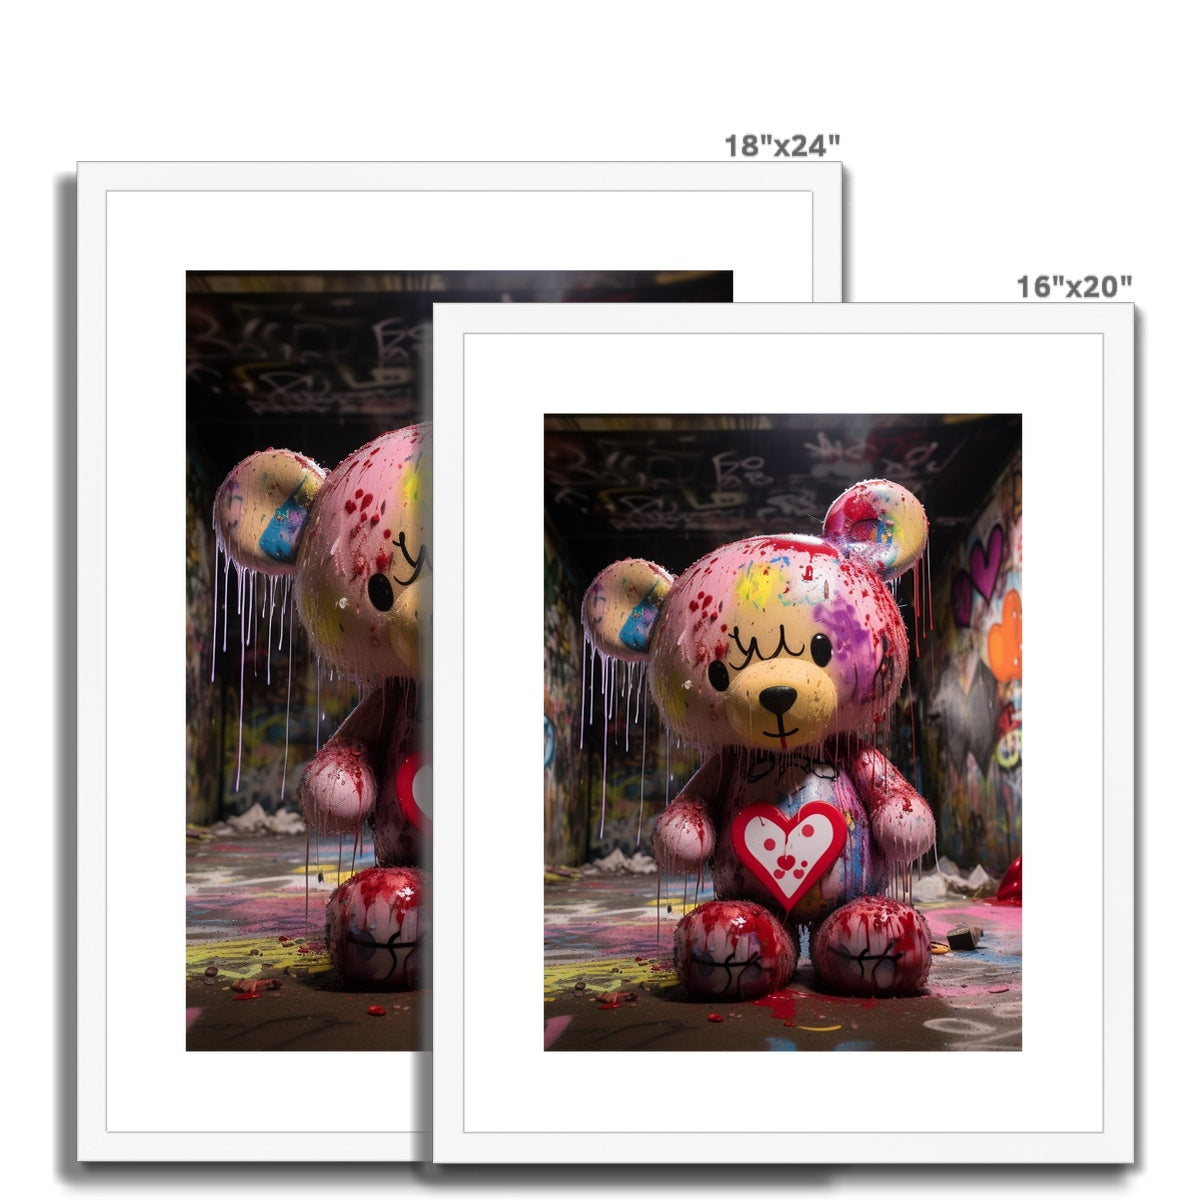 Teddy Got Drip: Limited Edition Framed & Mounted Print